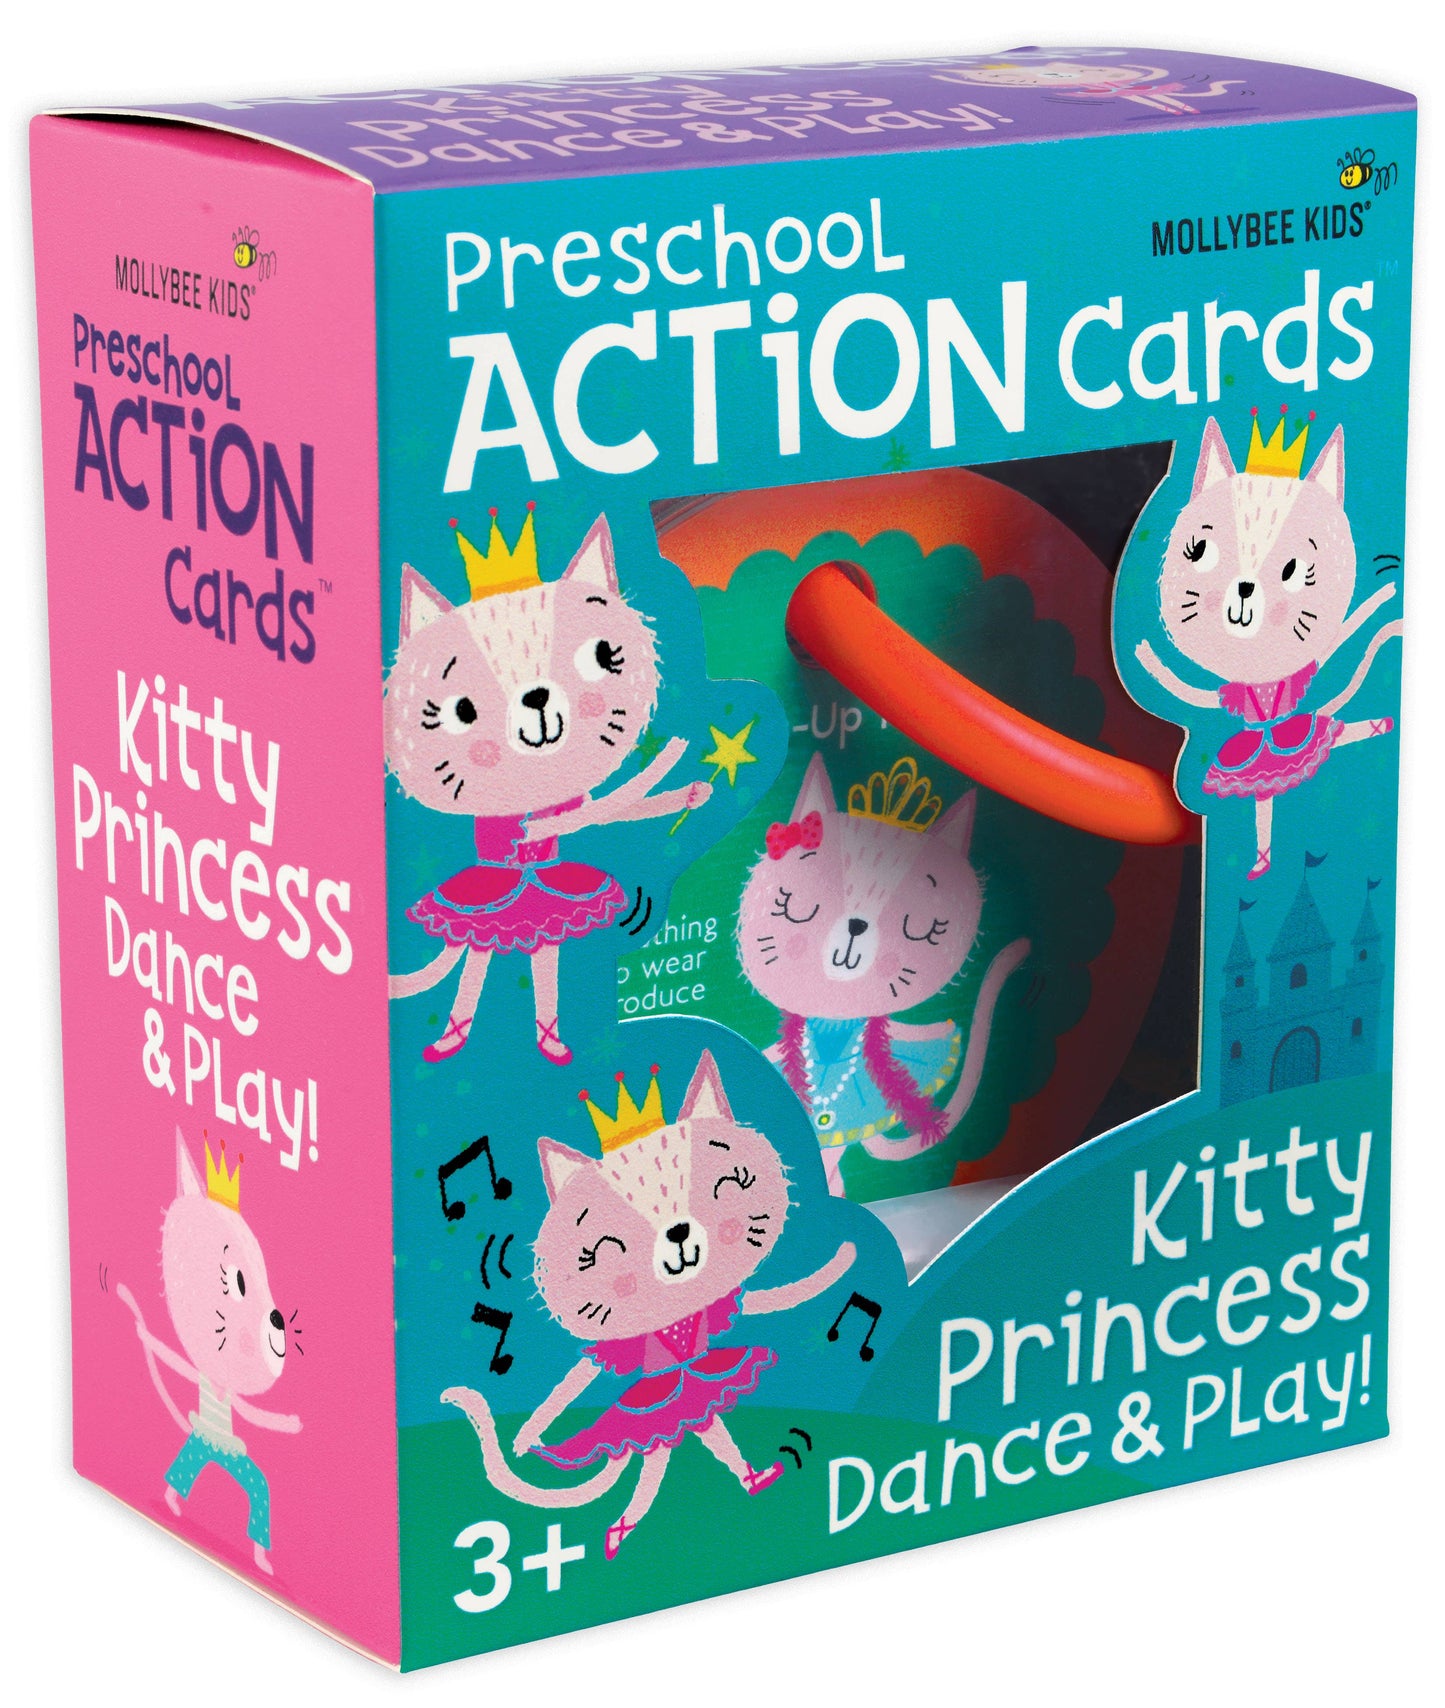 Preschool Action Cards Kitty Princess Dance & Play!